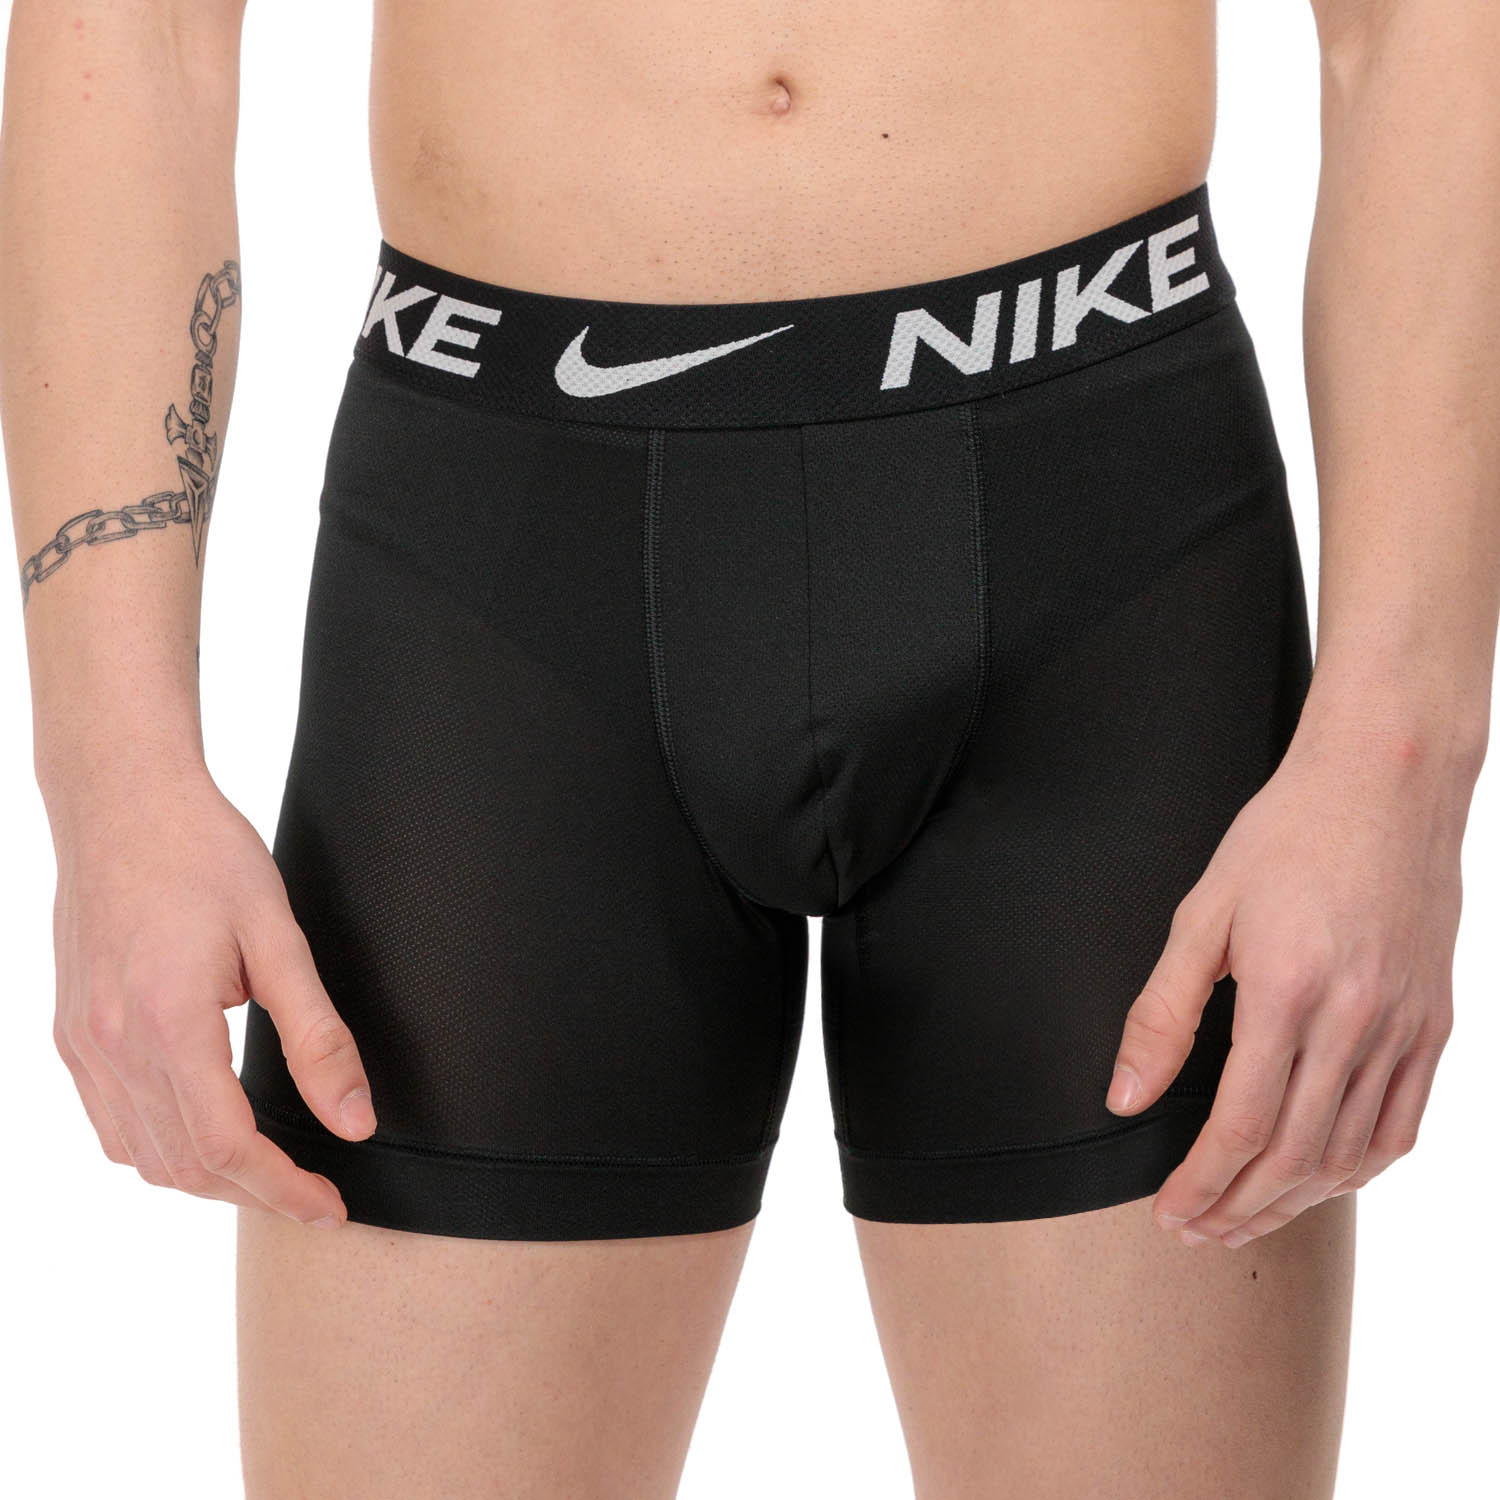 Nike Logo x 3 Men's Underwear Boxer - Black